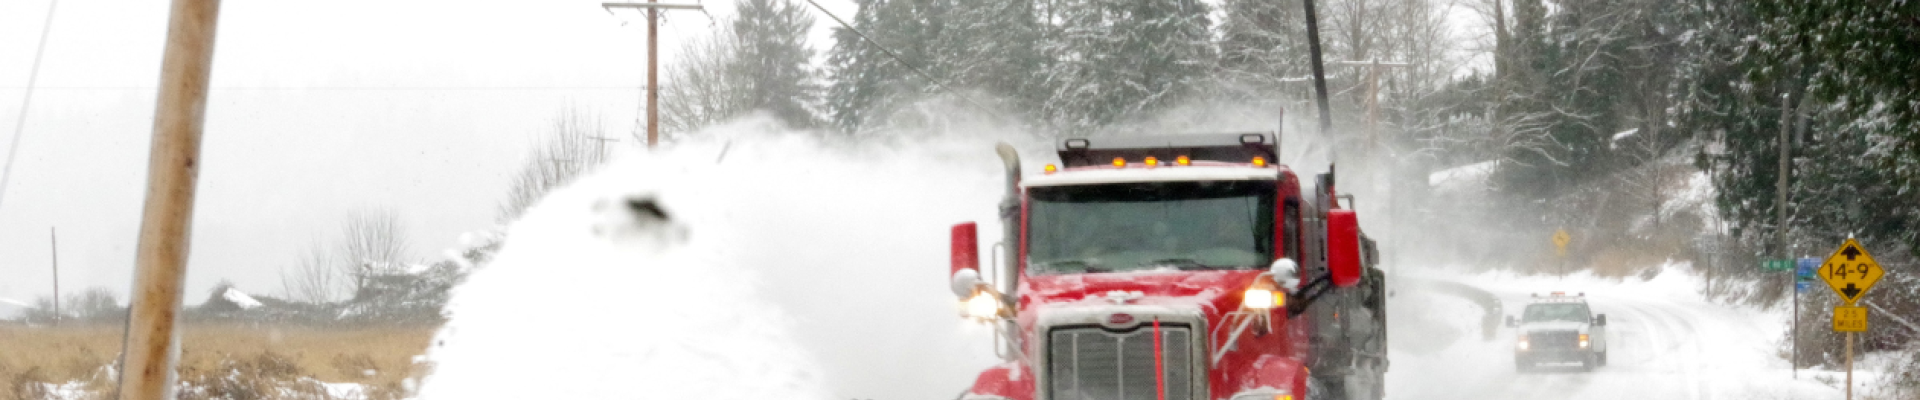 plow truck plowing snow